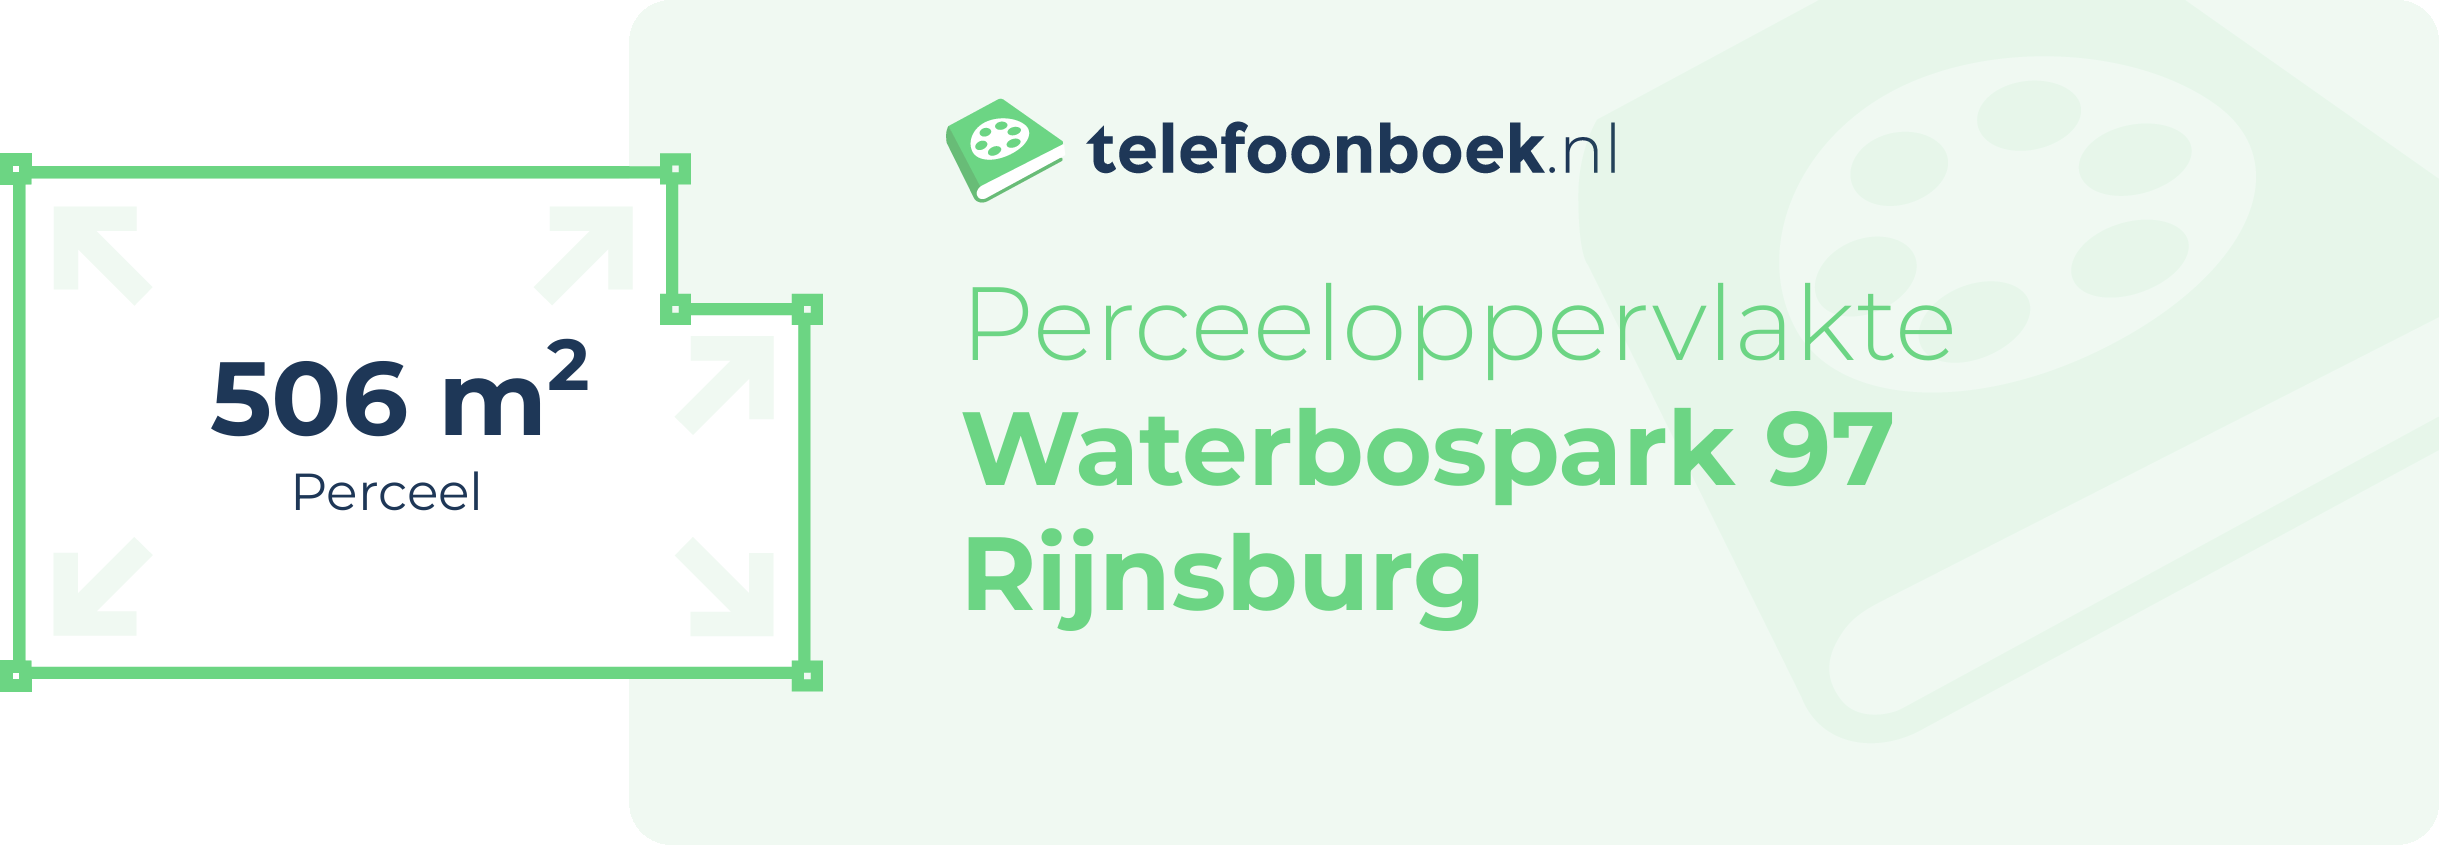 Perceeloppervlakte Waterbospark 97 Rijnsburg